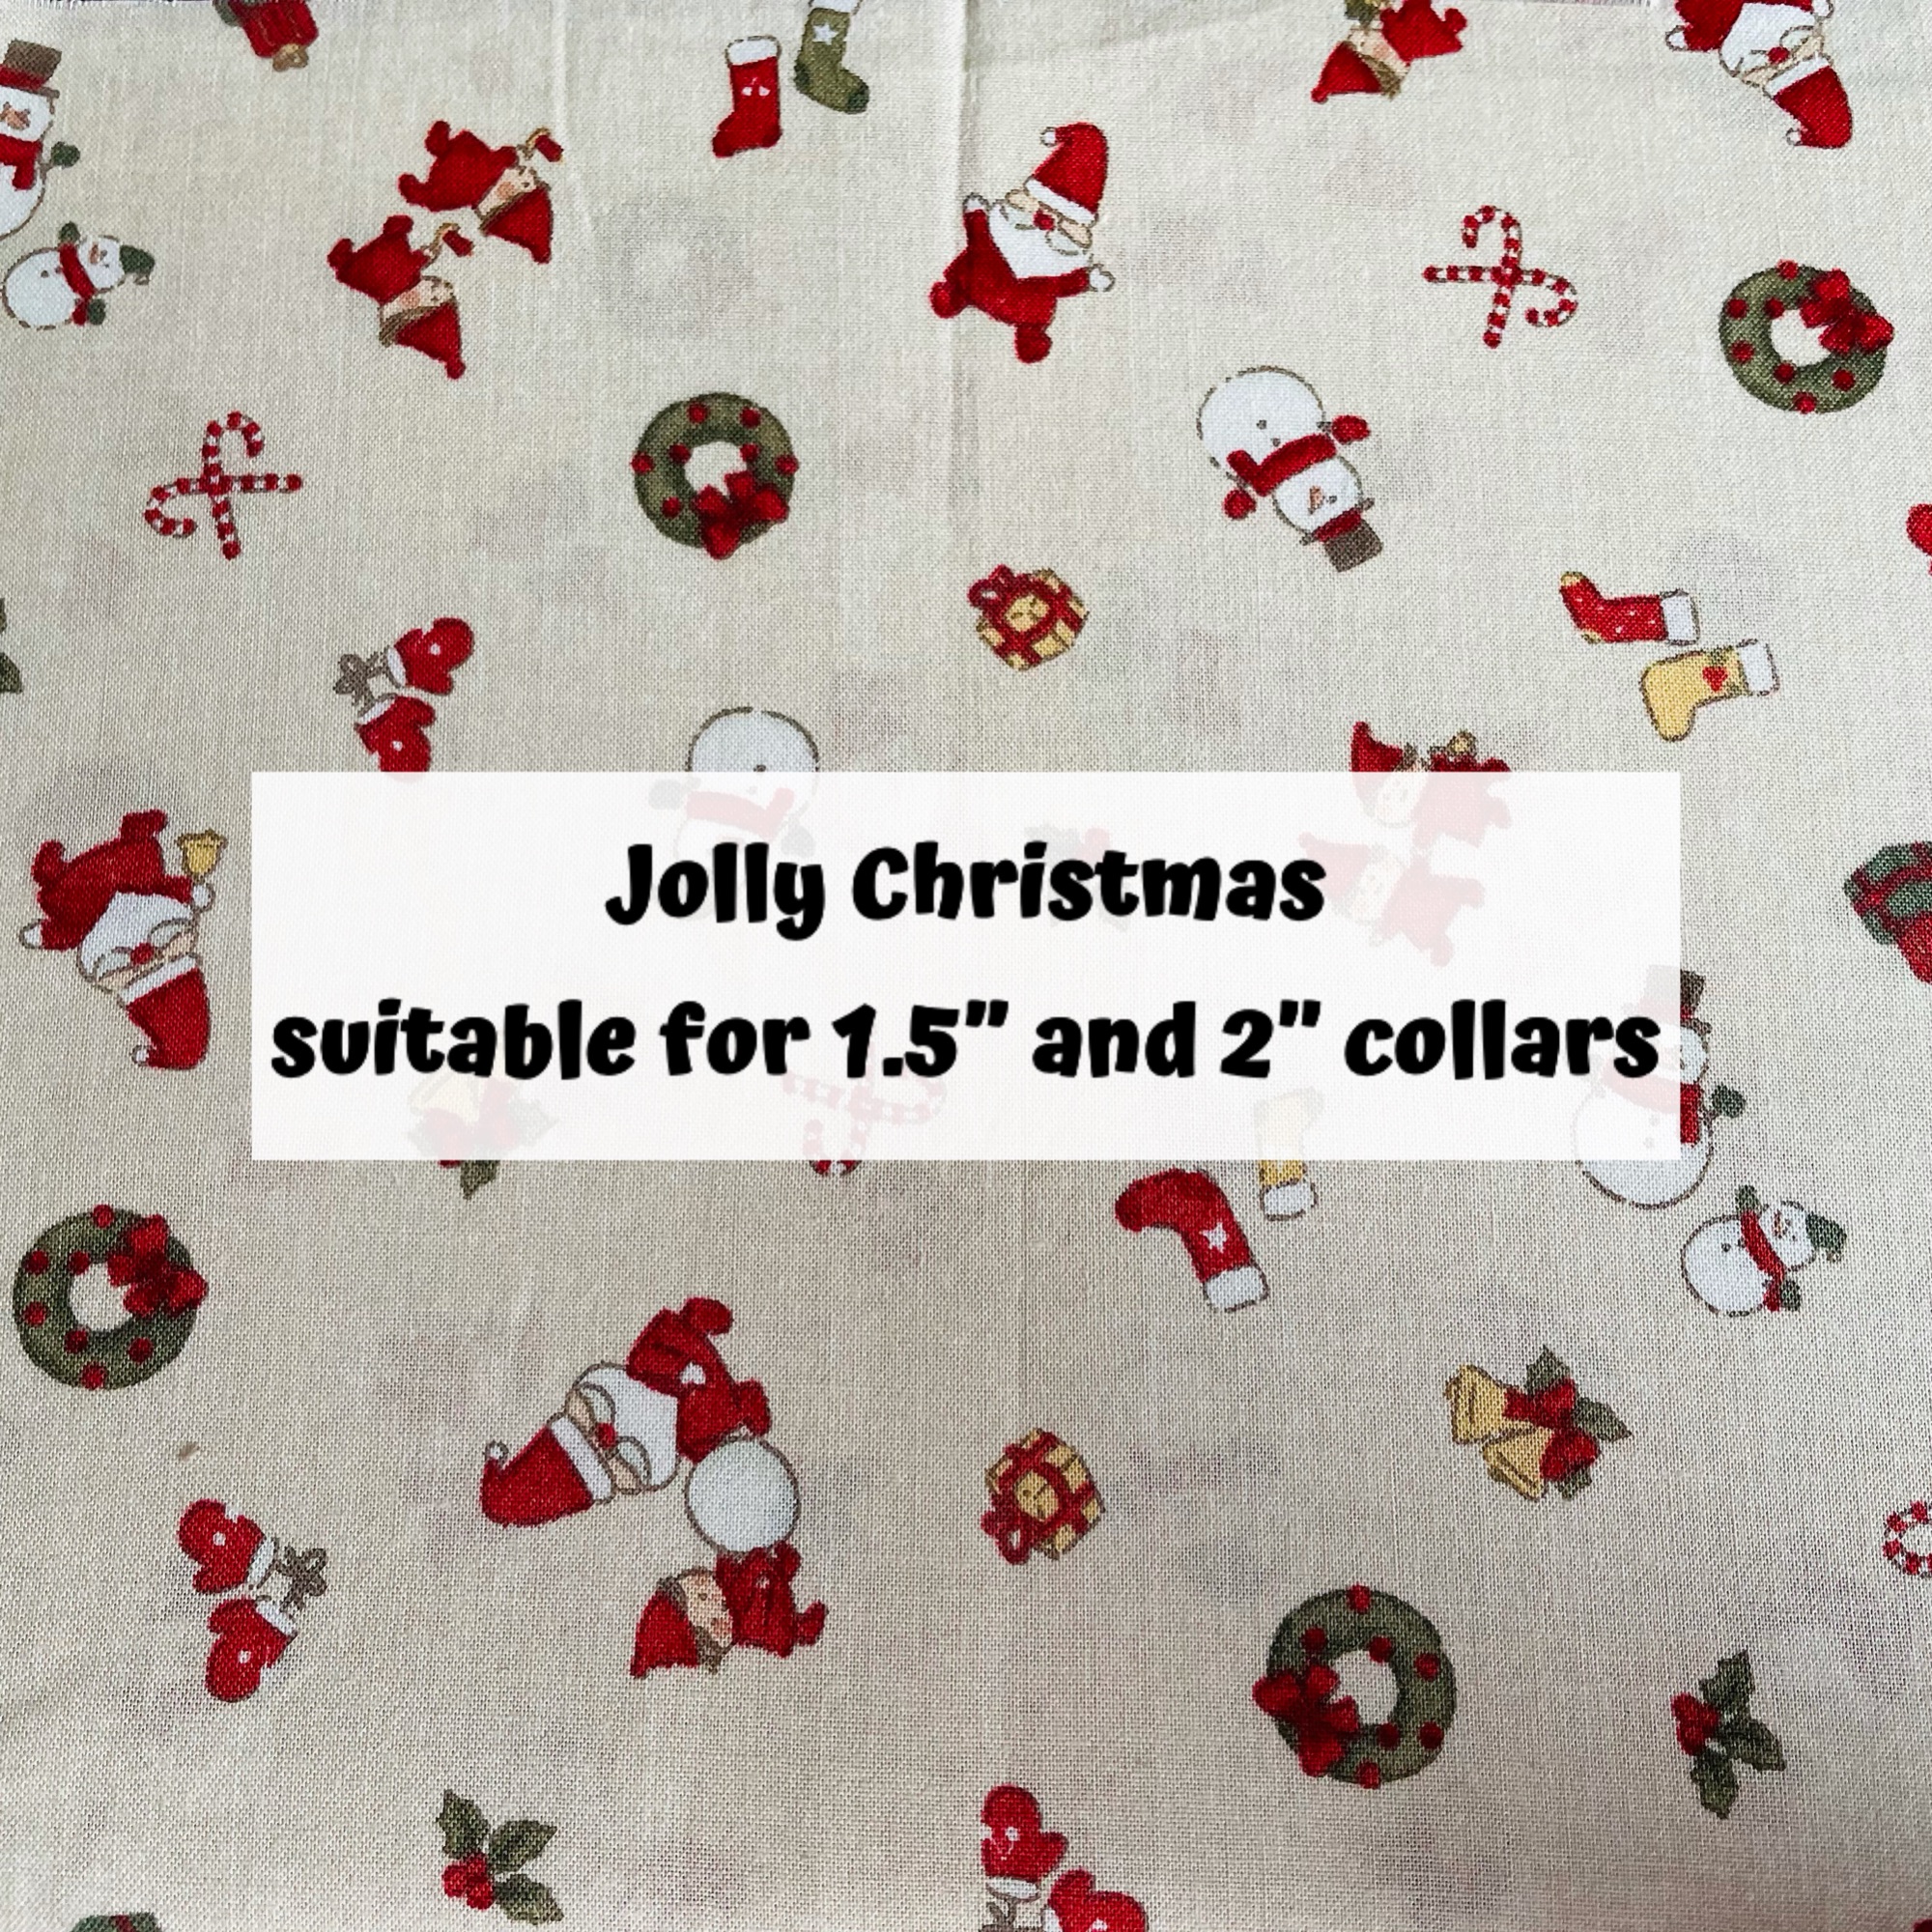 Jolly Christmas